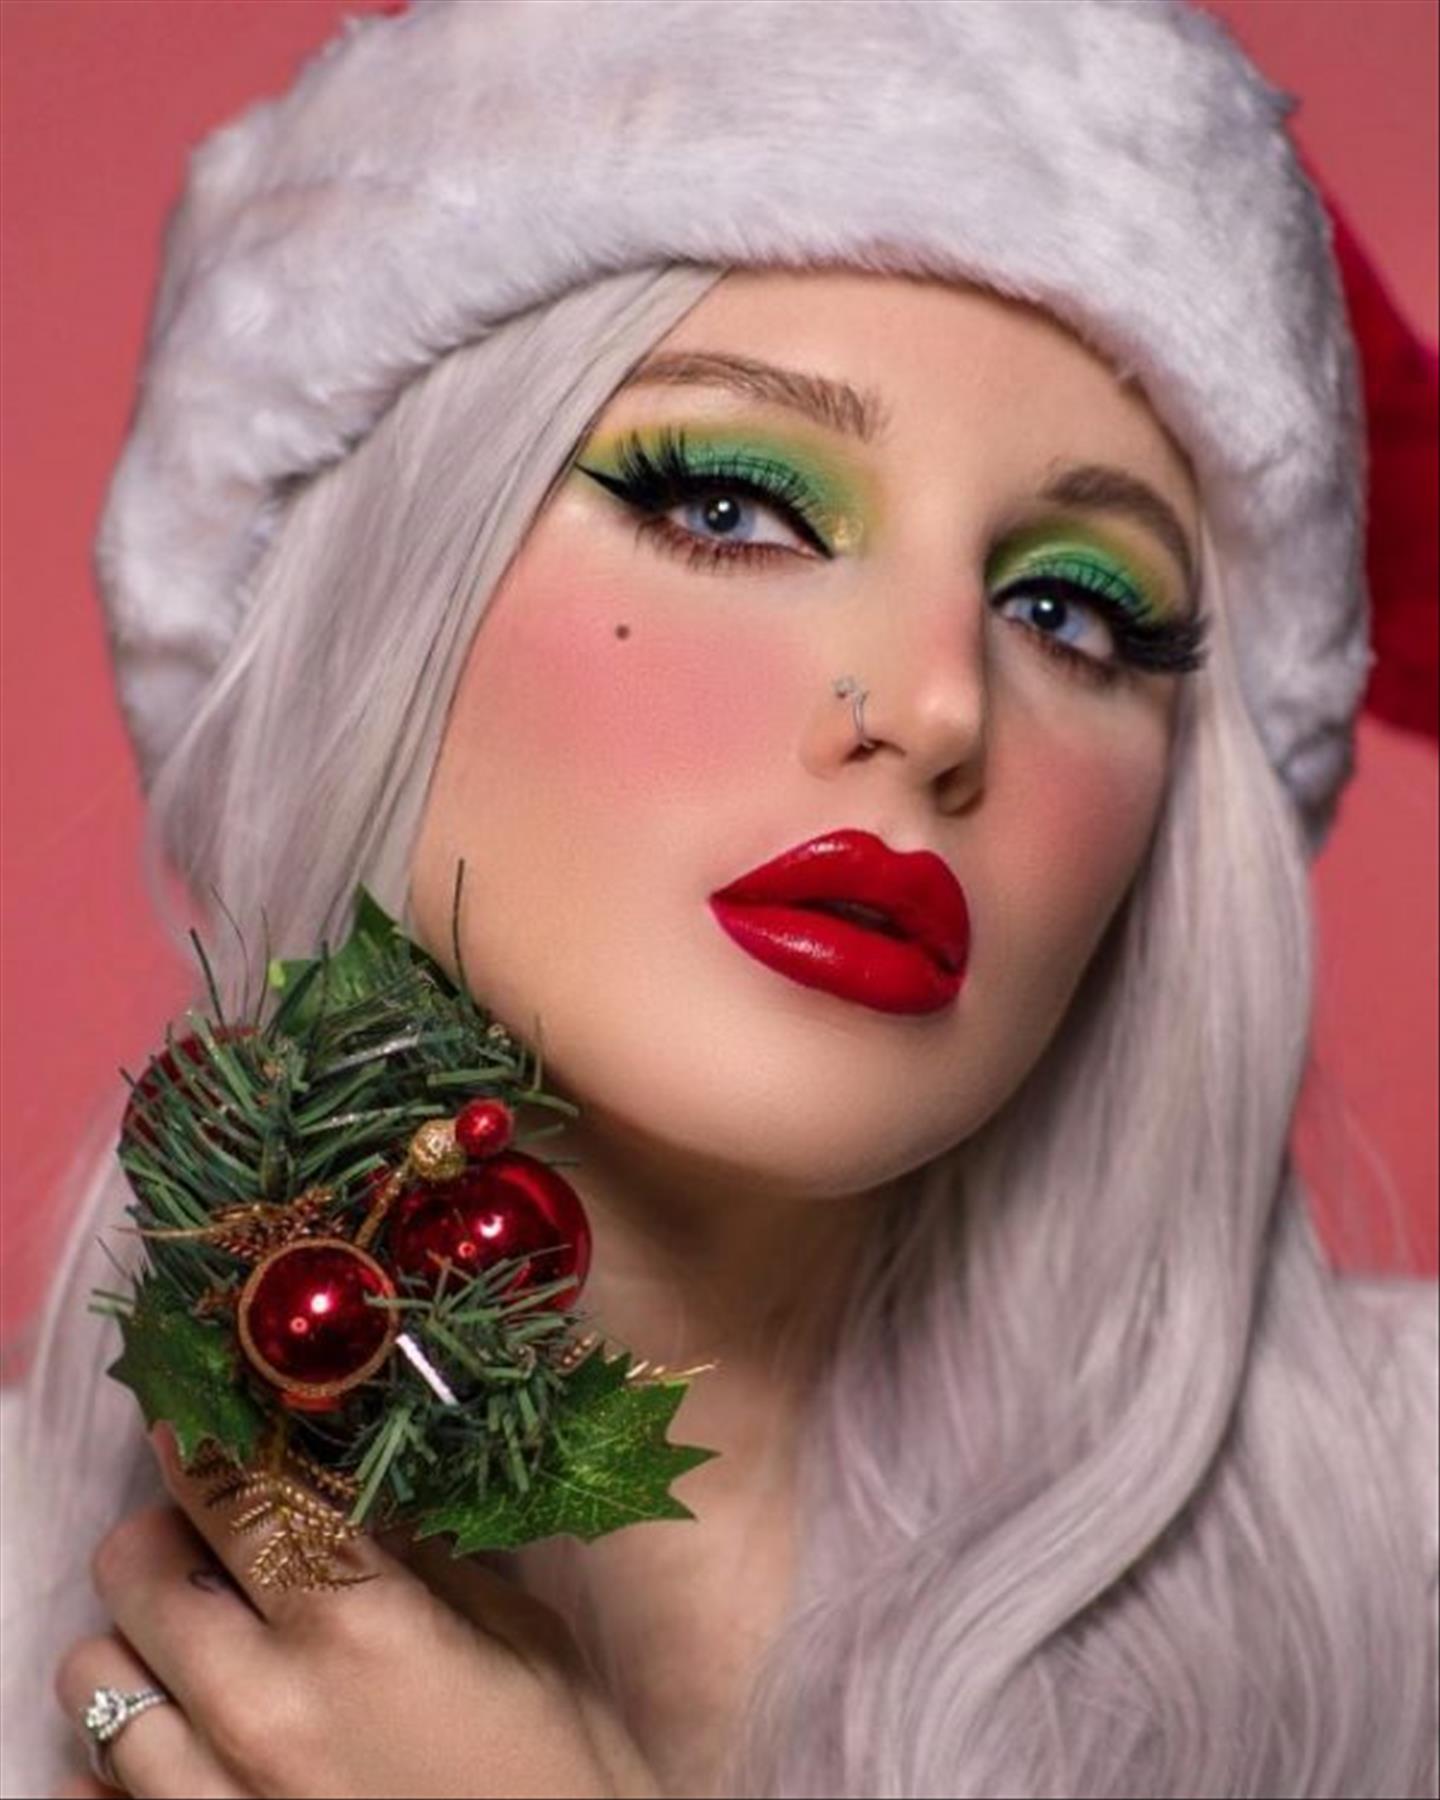 Festive Christmas Makeup Looks Ideas to Enjoy The Holiday